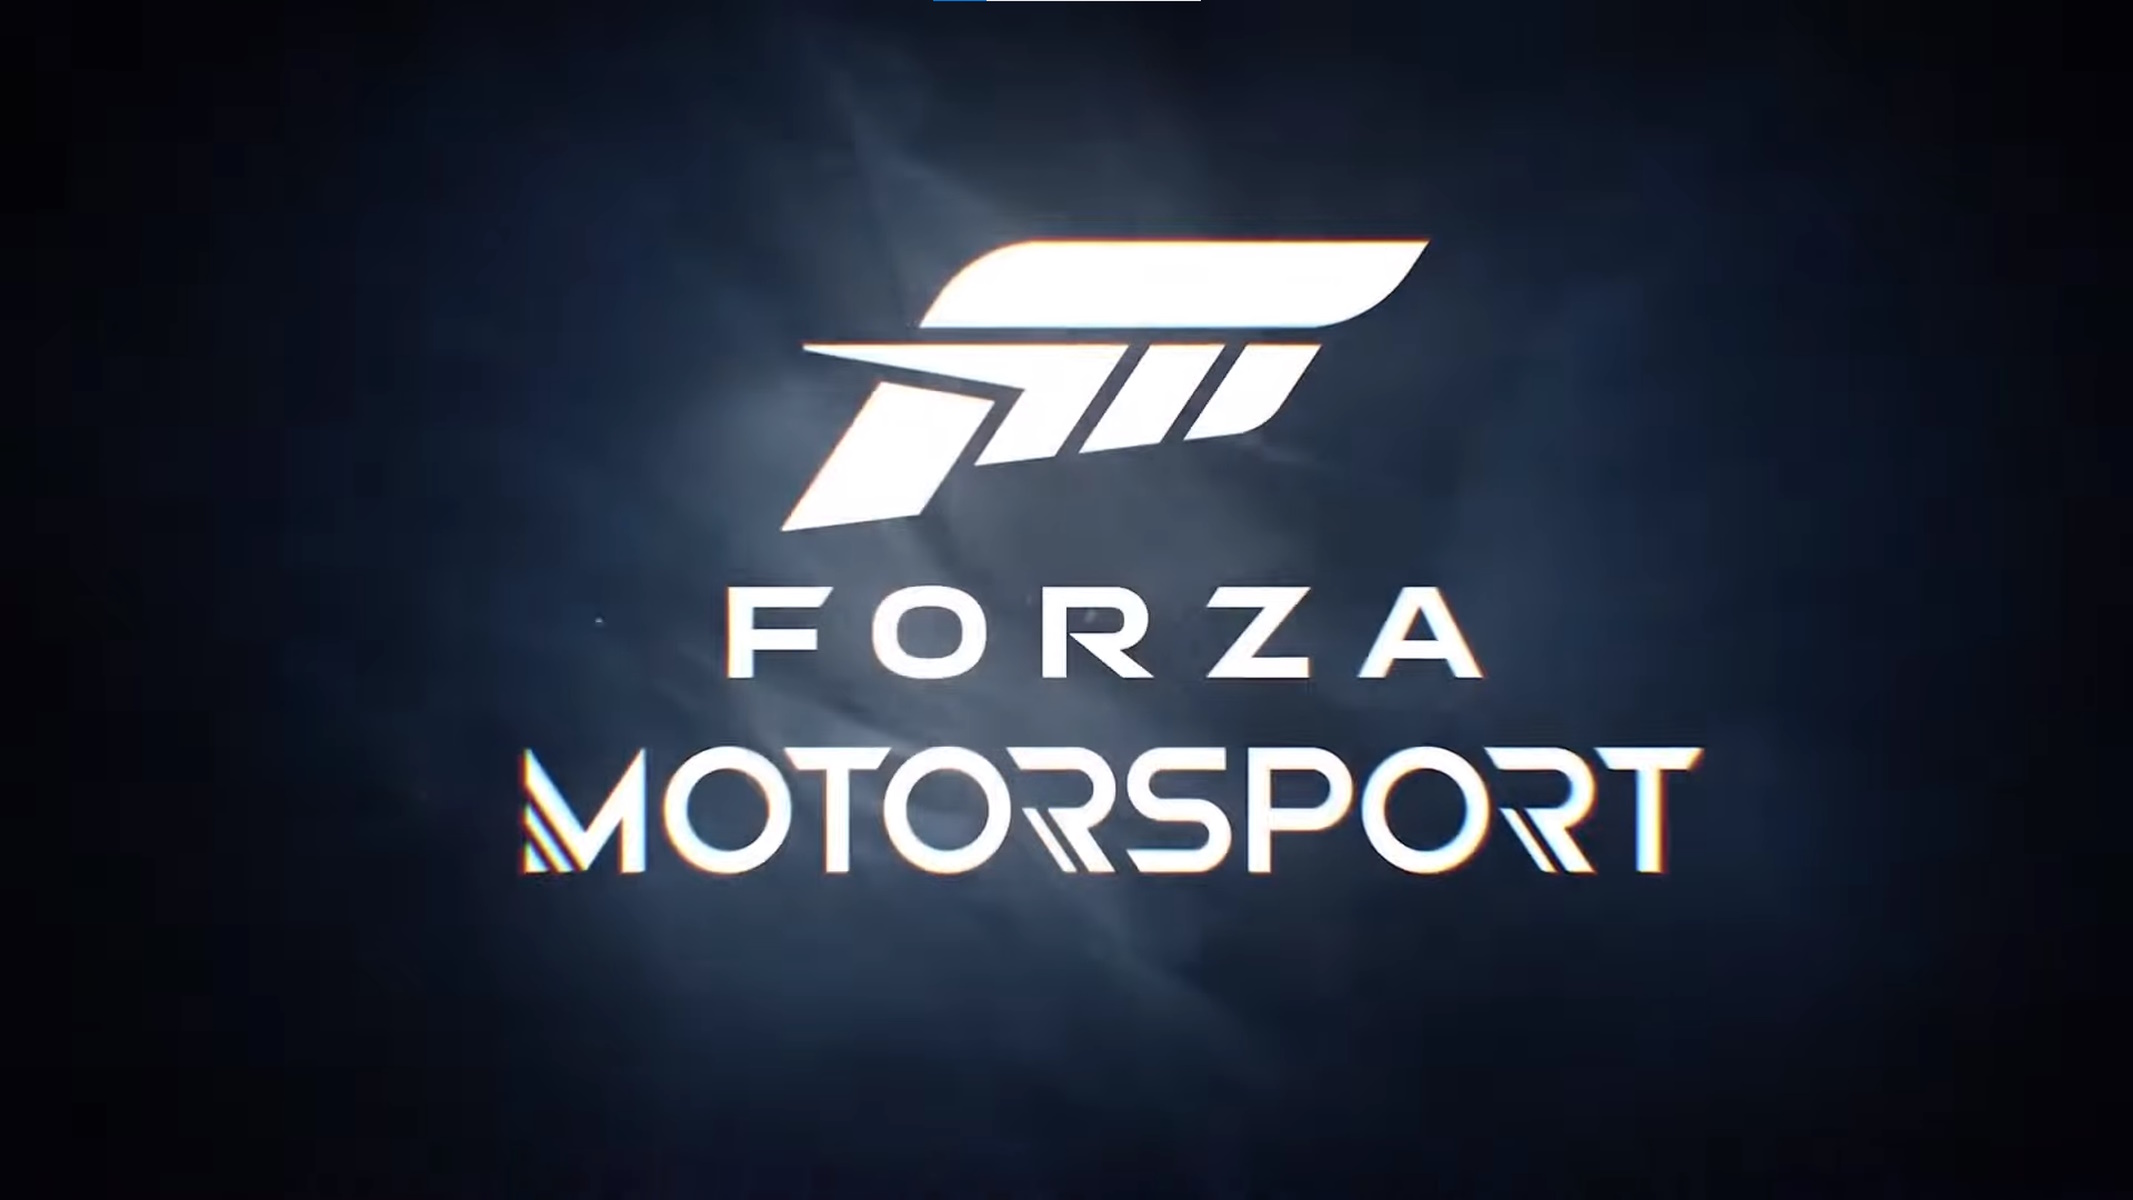 Forza Motorsport next gen logo